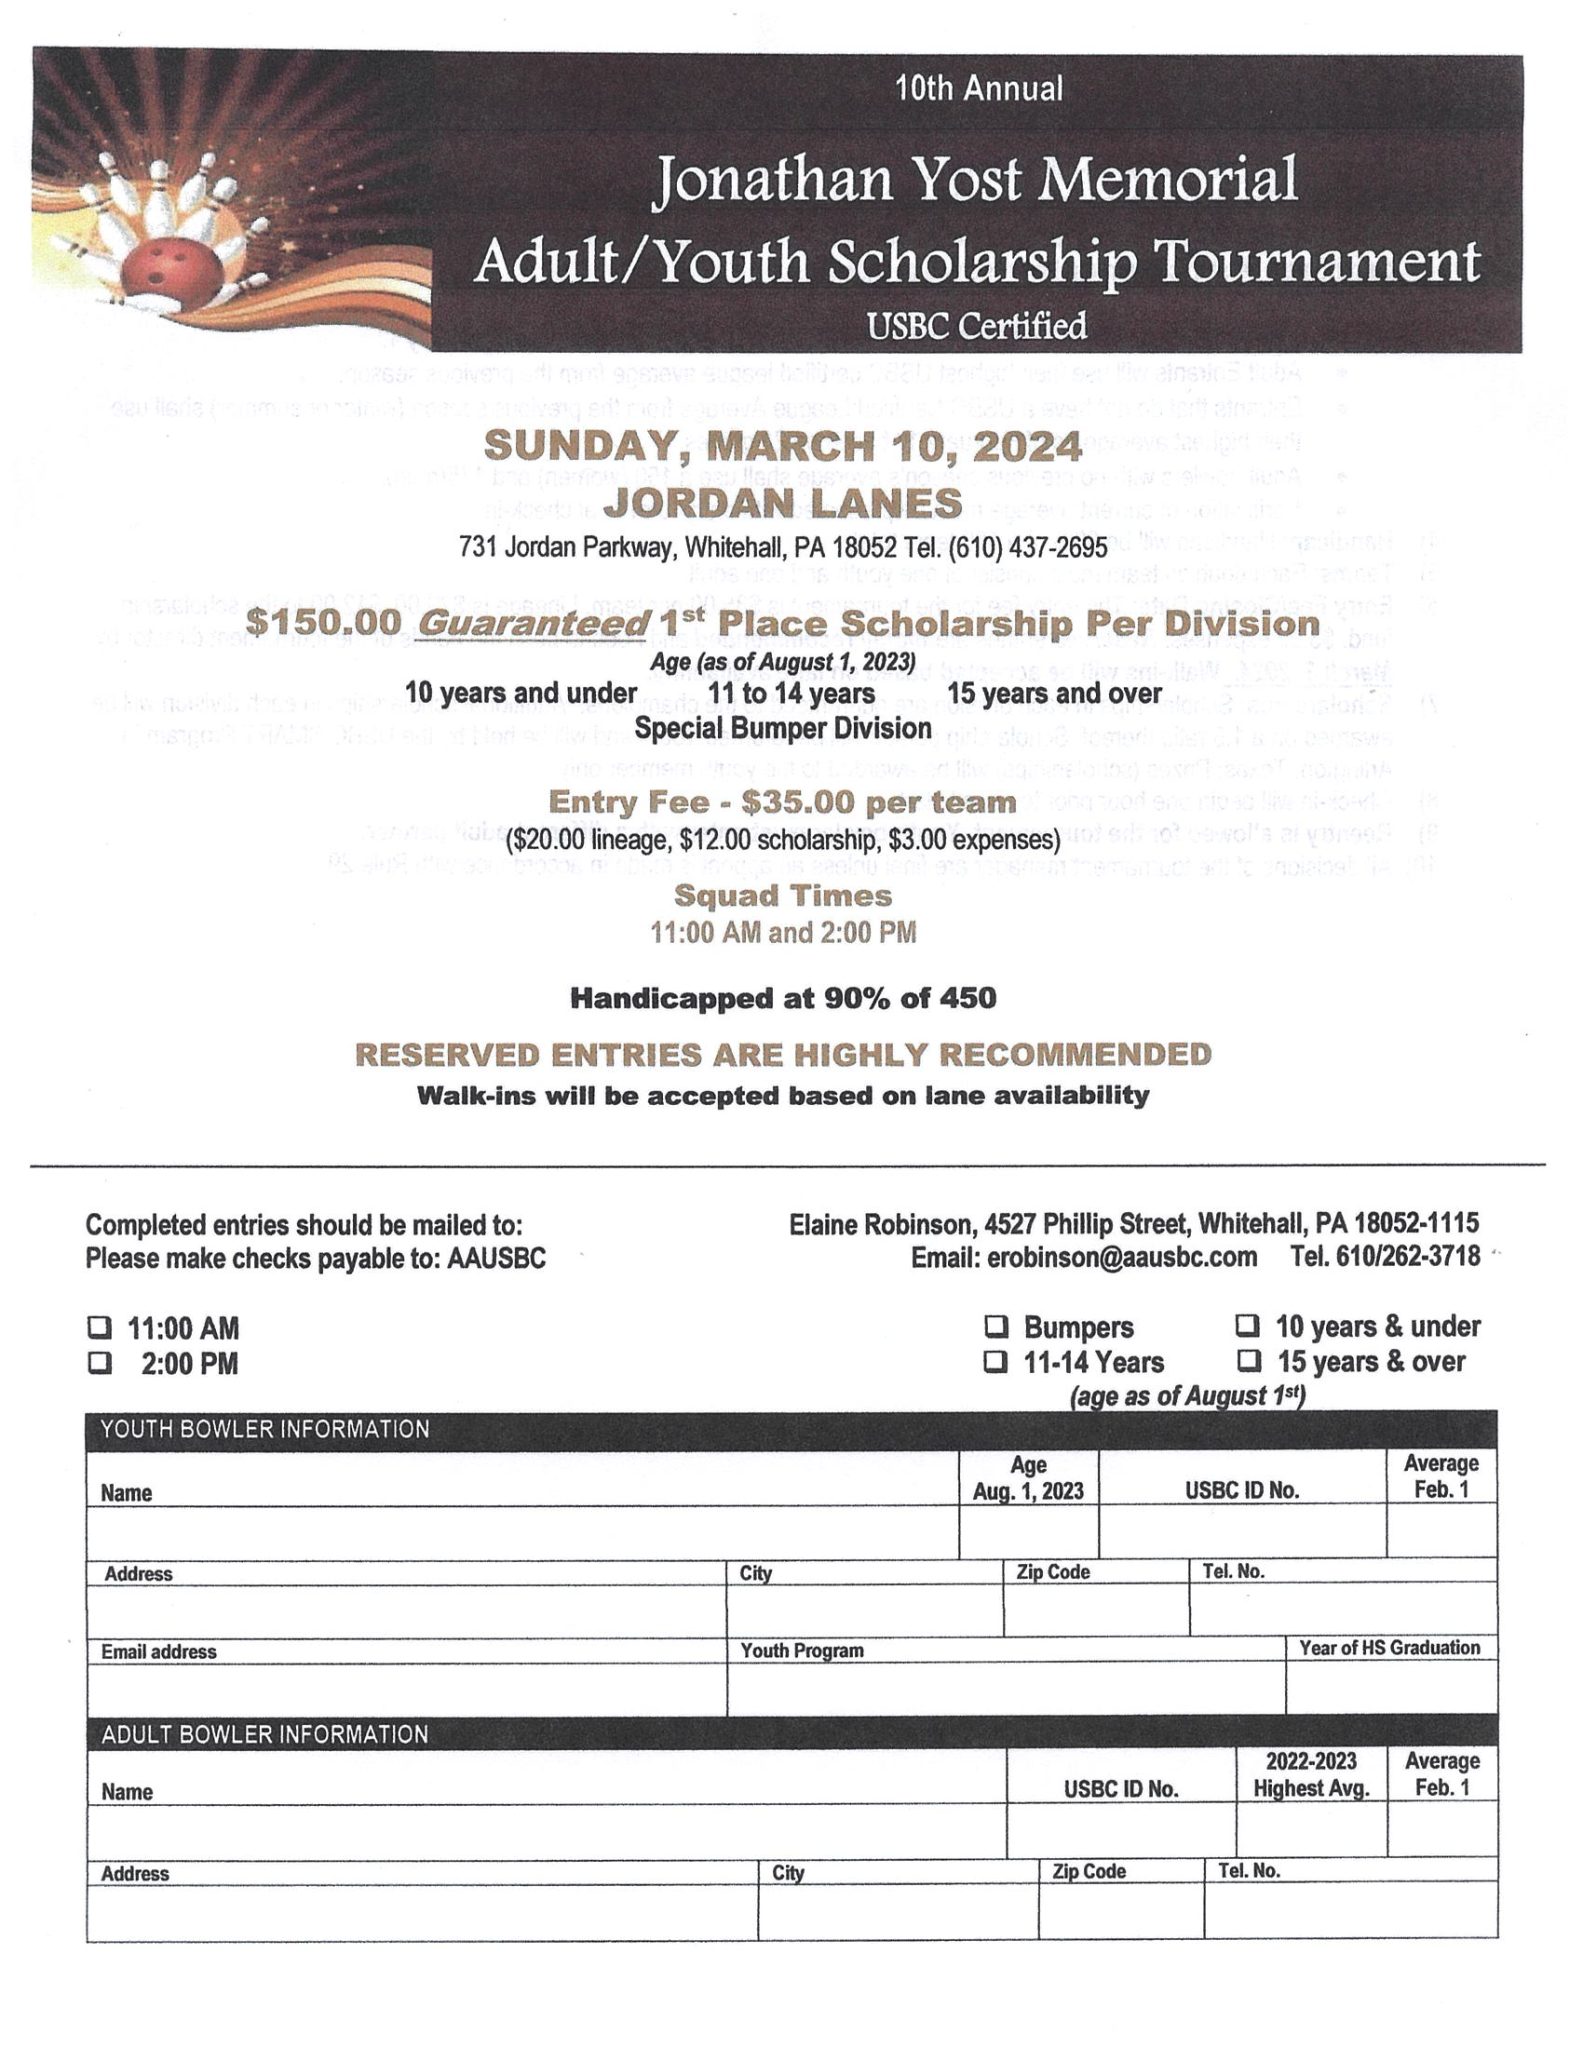 10th Annual Jonathan Yost Memorial Adult / Youth Scholarship Tournament @ The New Jordan Lanes